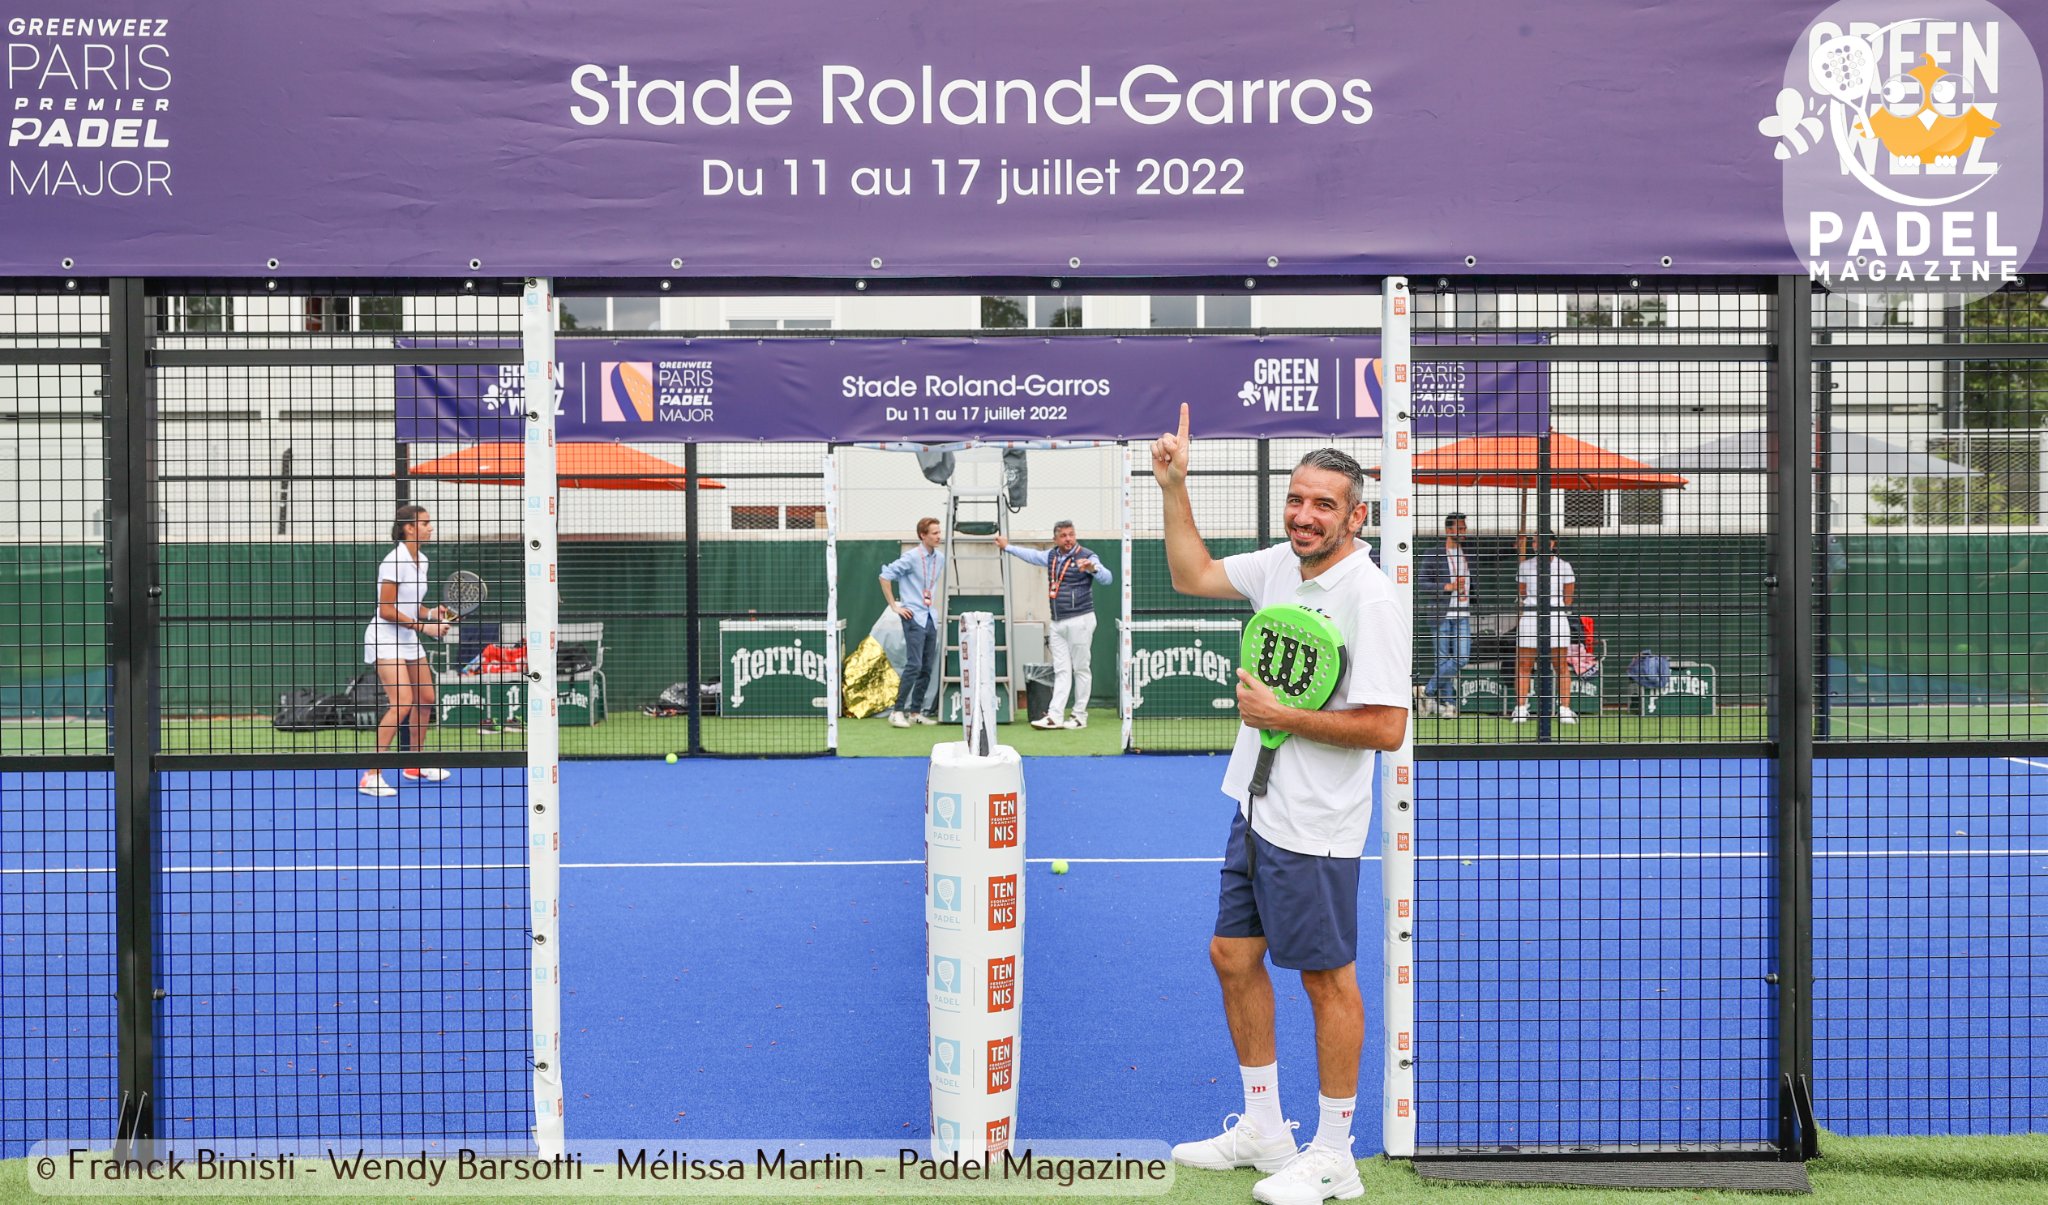 stadio Roland Garros greenweez paris premier padel major